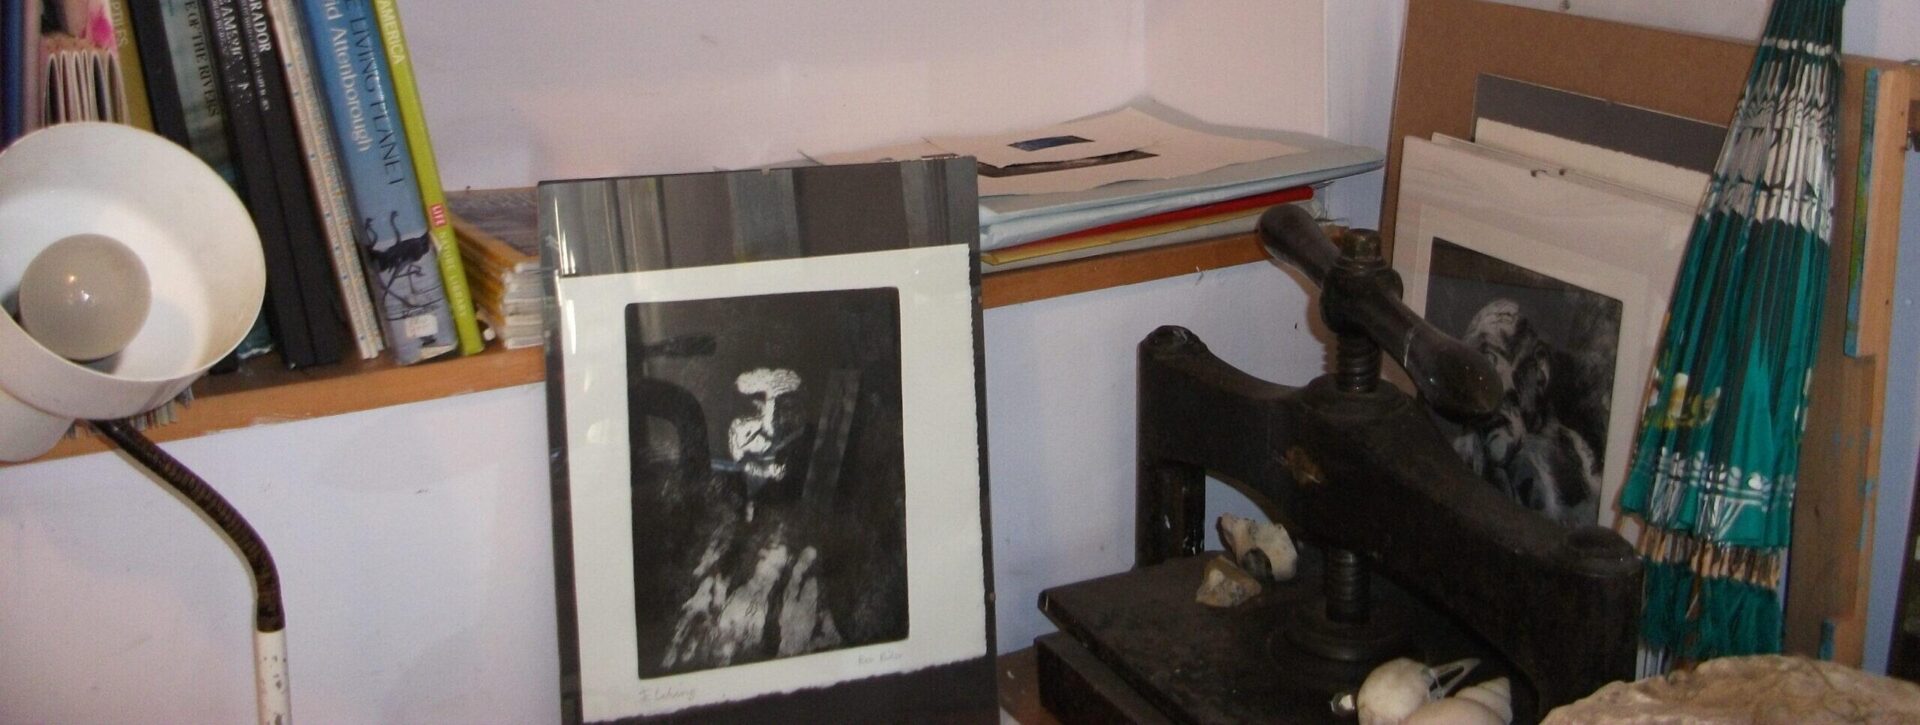 Finished prints in Helena's studio